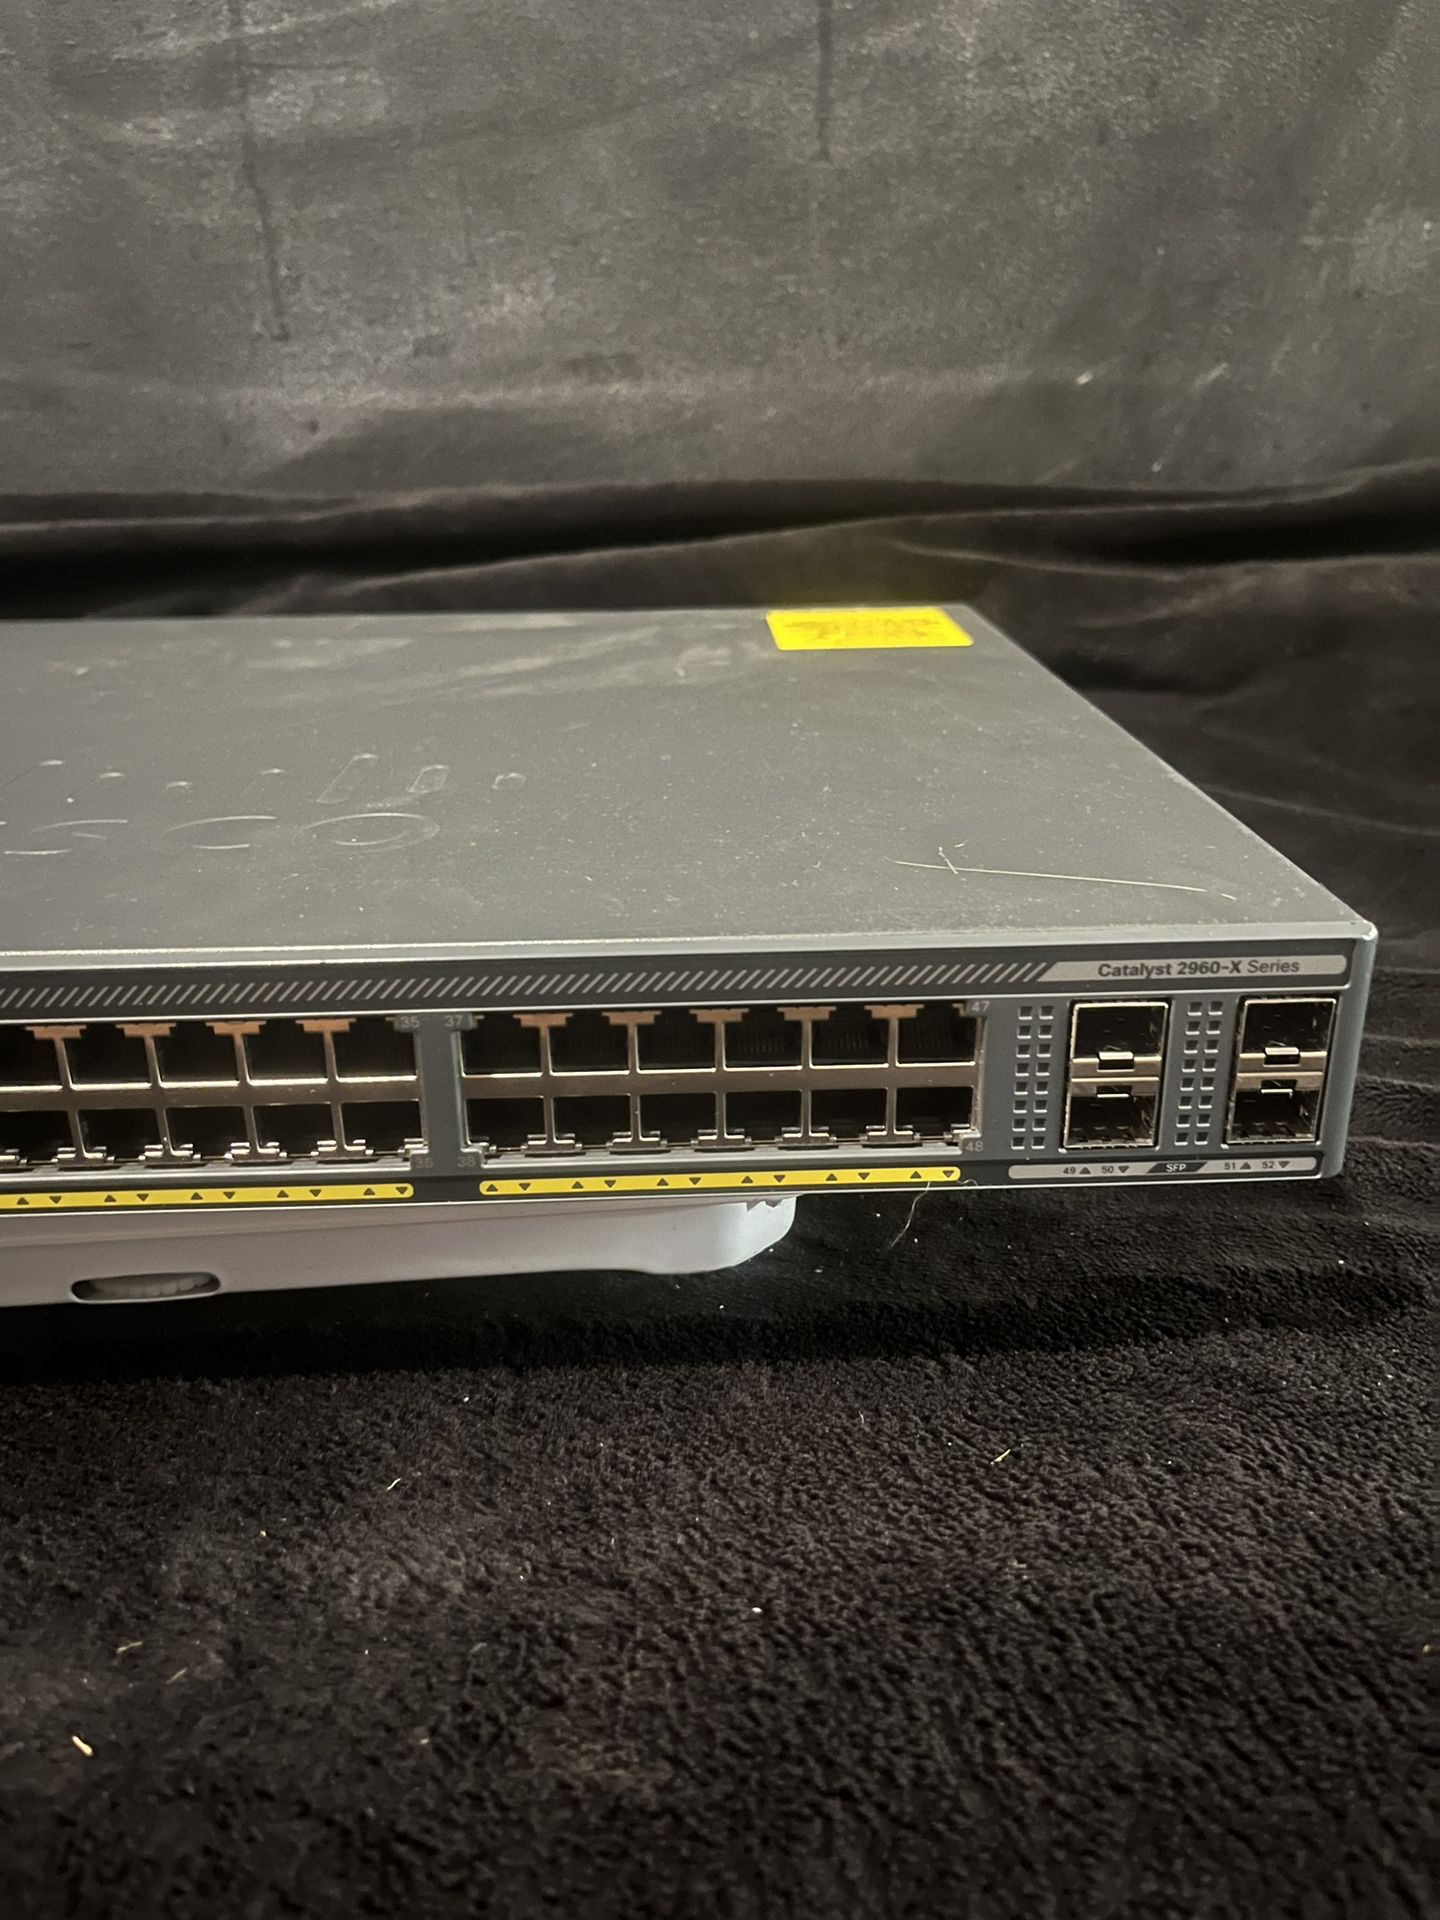 Cisco Catalyst WS-C2960X-24PS-L 24 Port Managed Gigabit Ethernet Network Switch